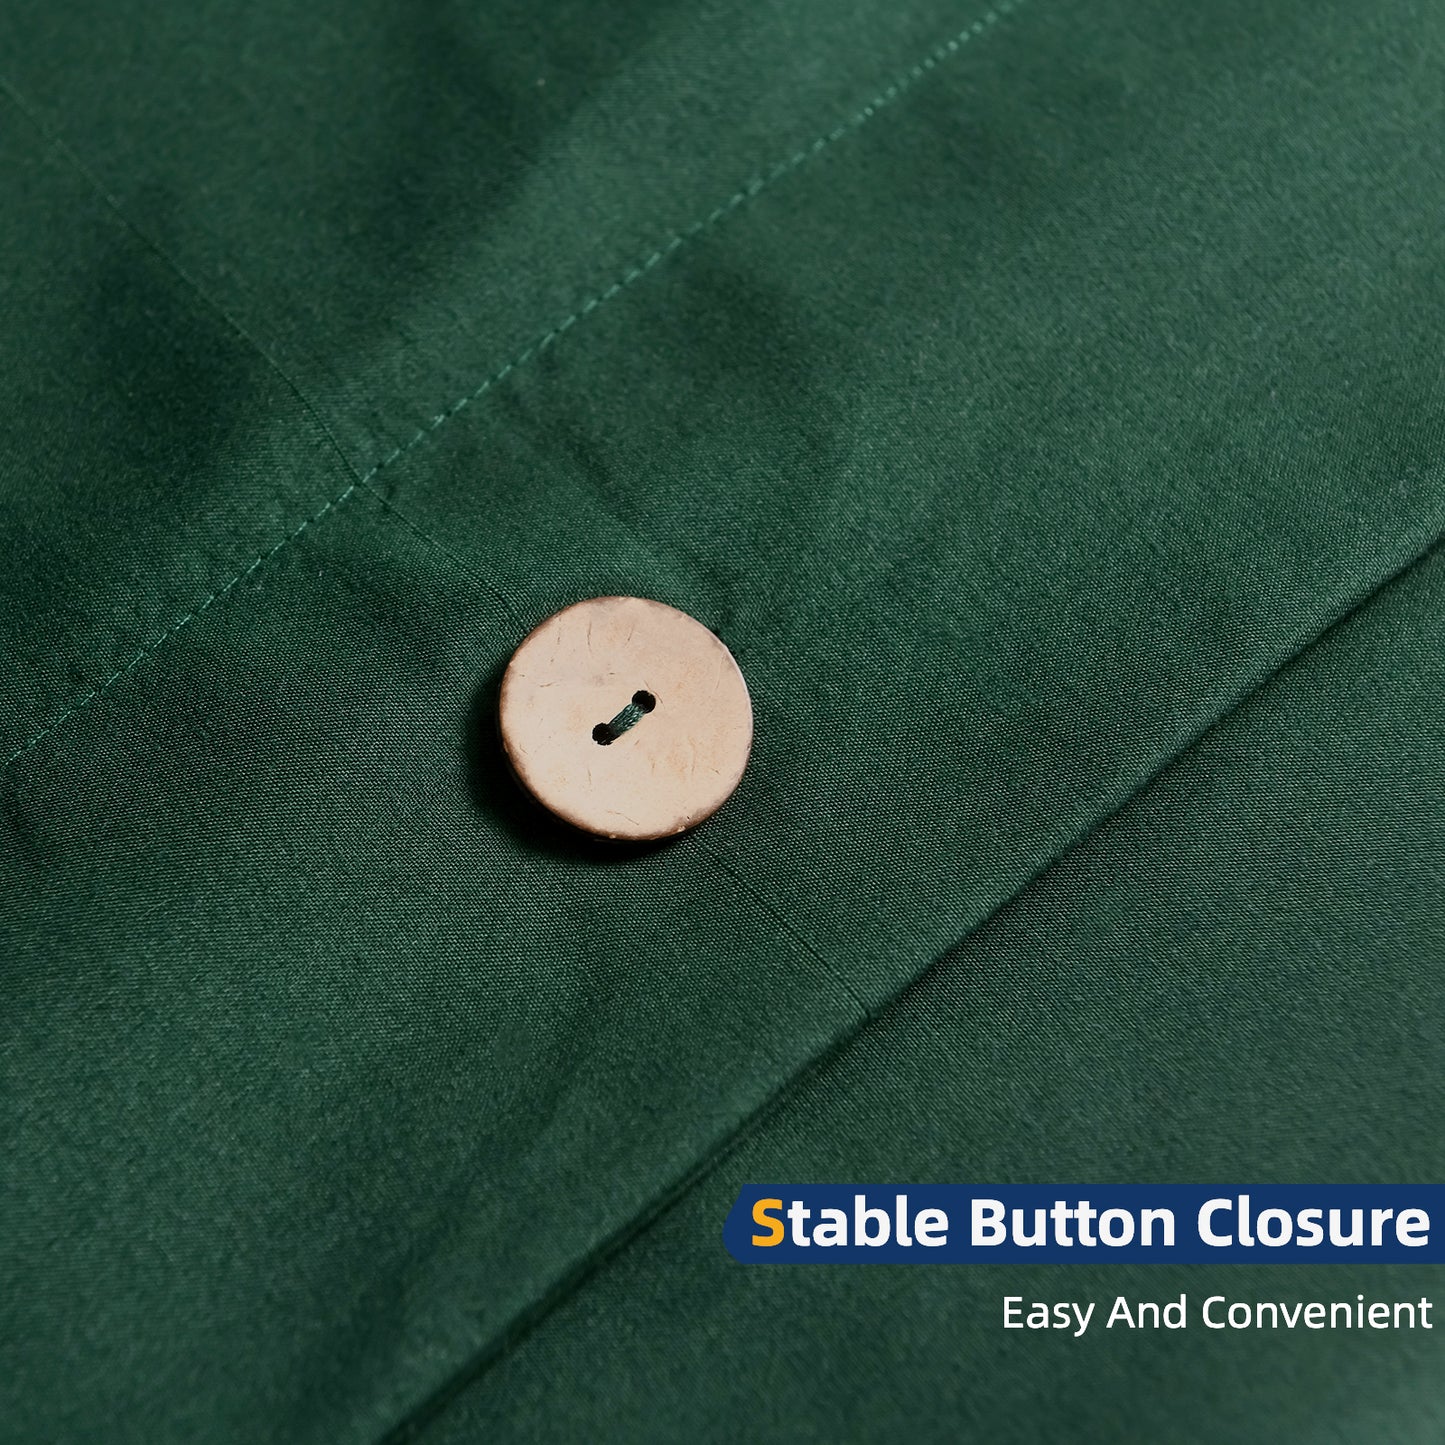 Argstar Button Closure Duvet Cover Set Forest Green Color